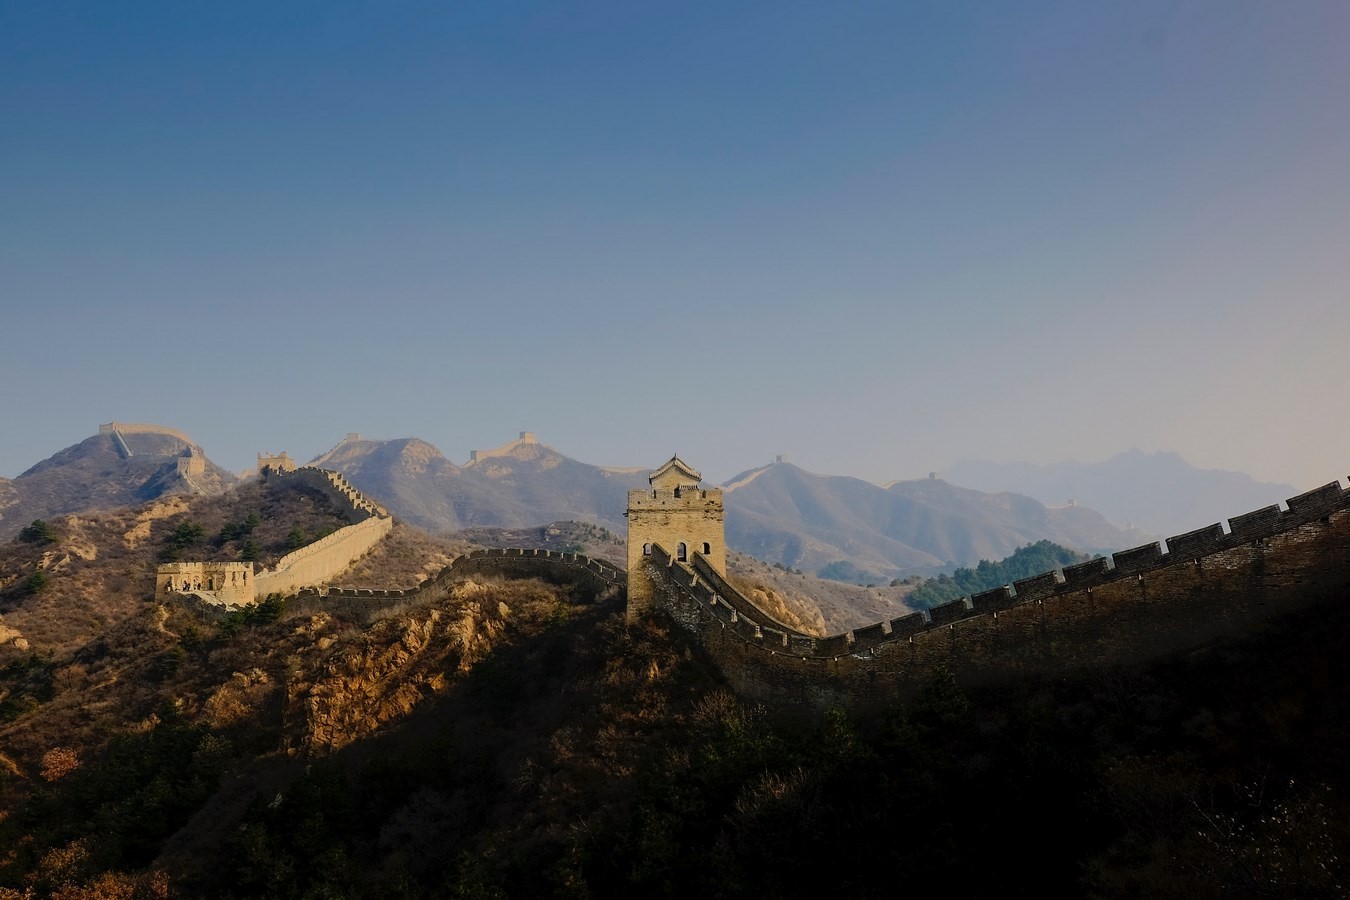 The Great Wall of China - Beijing, China - Sheet2